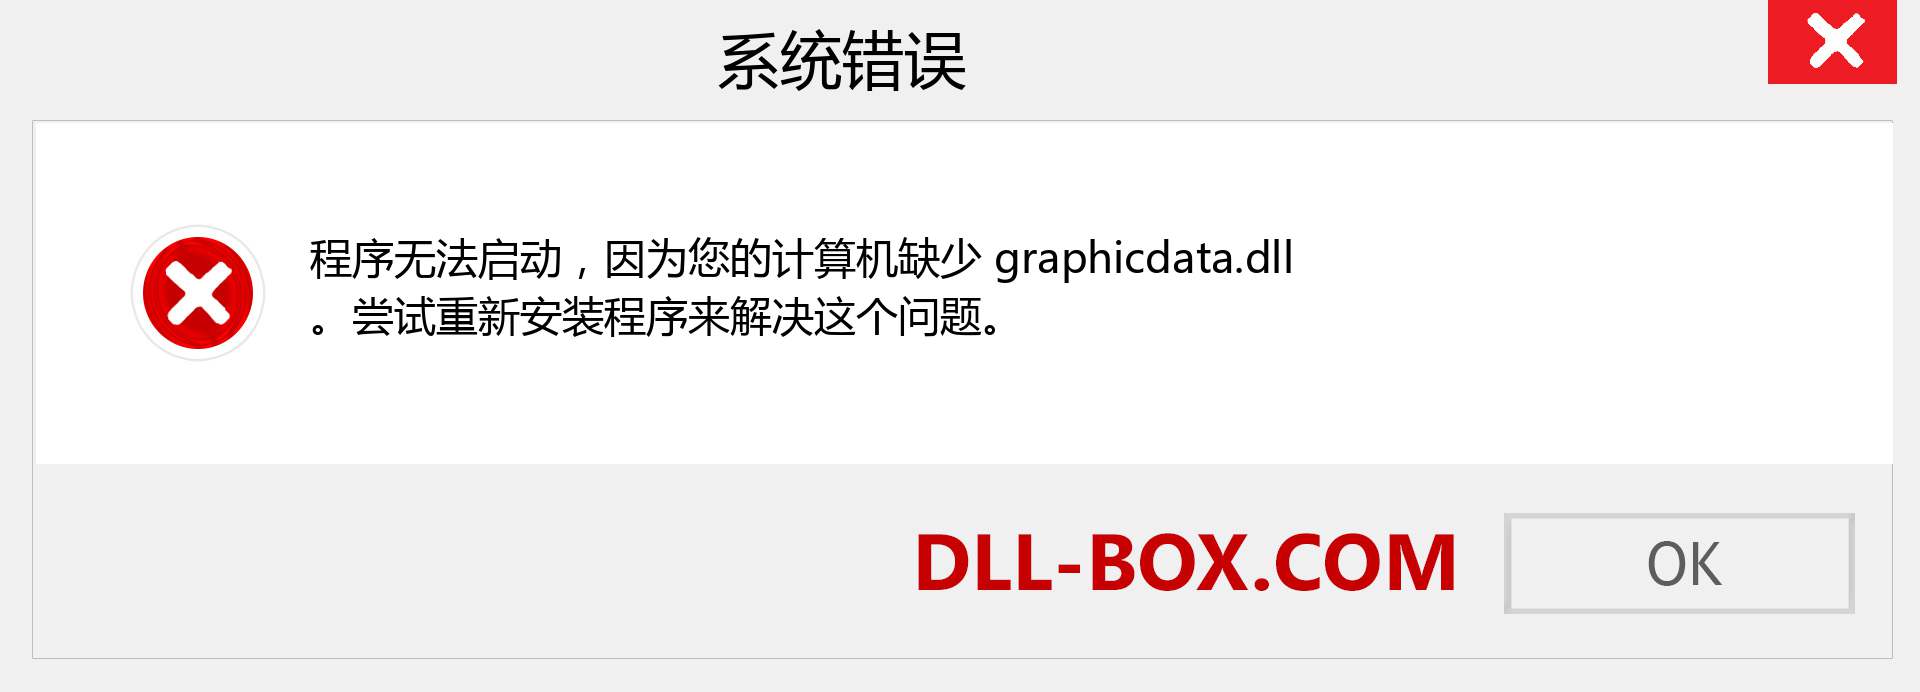 graphicdata.dll 文件丢失？。 适用于 Windows 7、8、10 的下载 - 修复 Windows、照片、图像上的 graphicdata dll 丢失错误